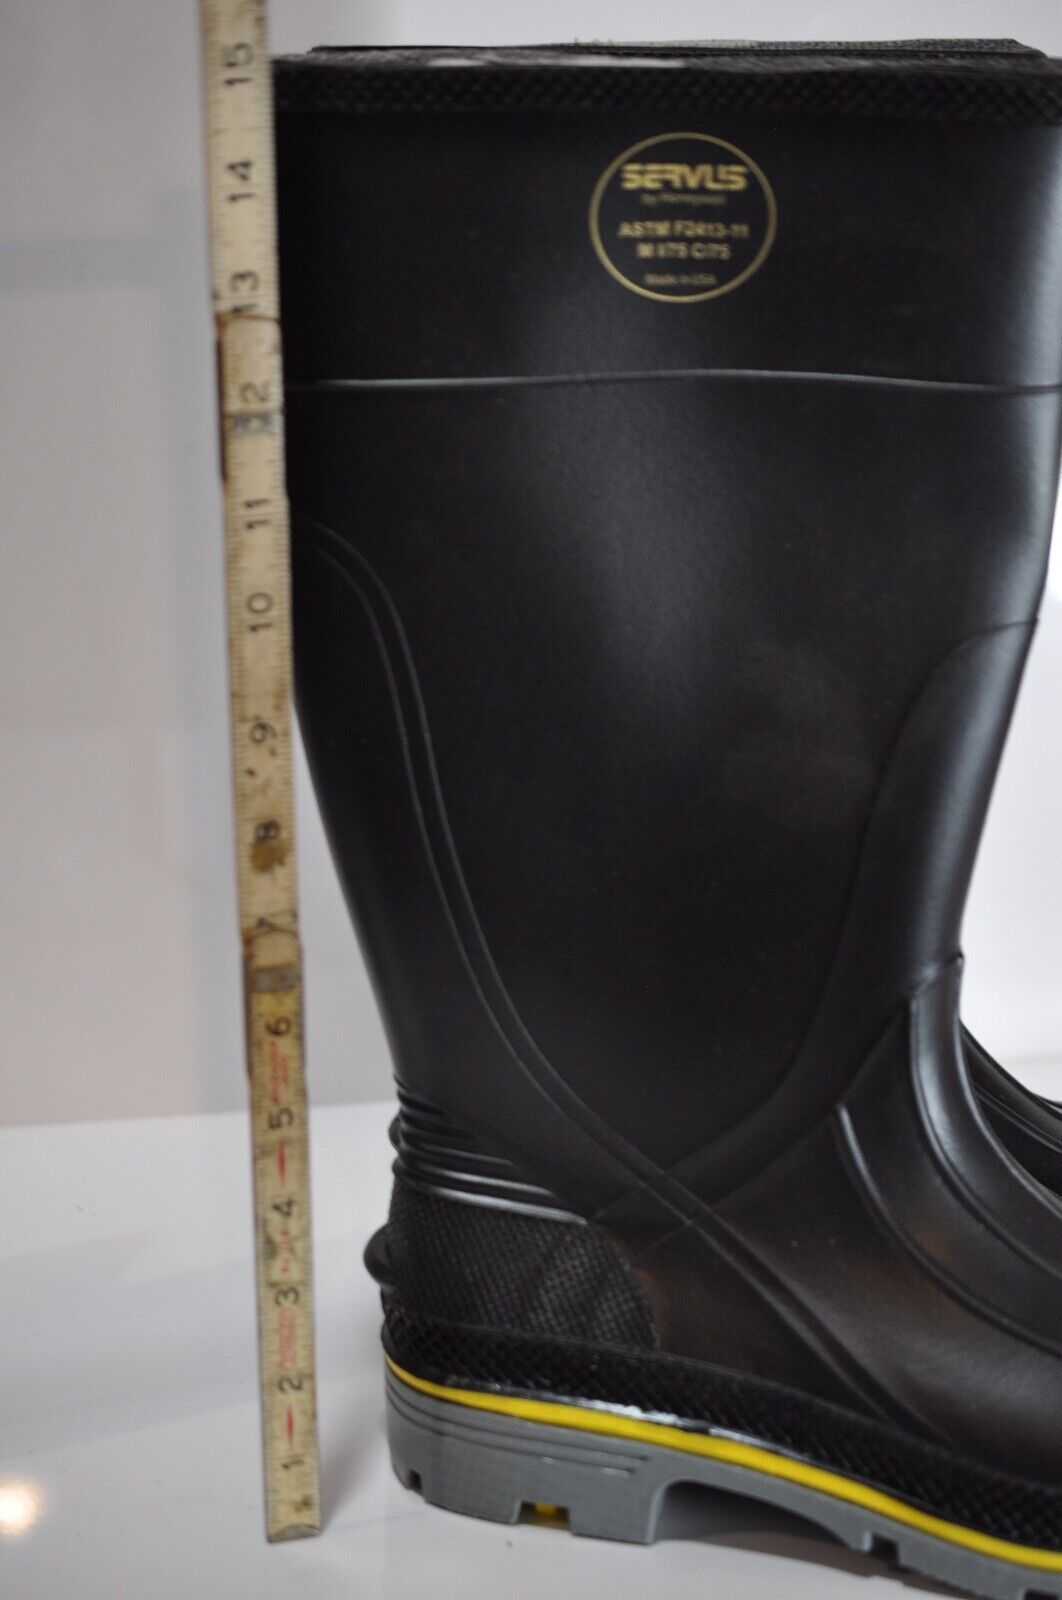 New Servus by Honeywell Mens 9 tall work boots black ASTM F2413-11 USA Popularny klasyk, limitowana WYPRZEDAŻ